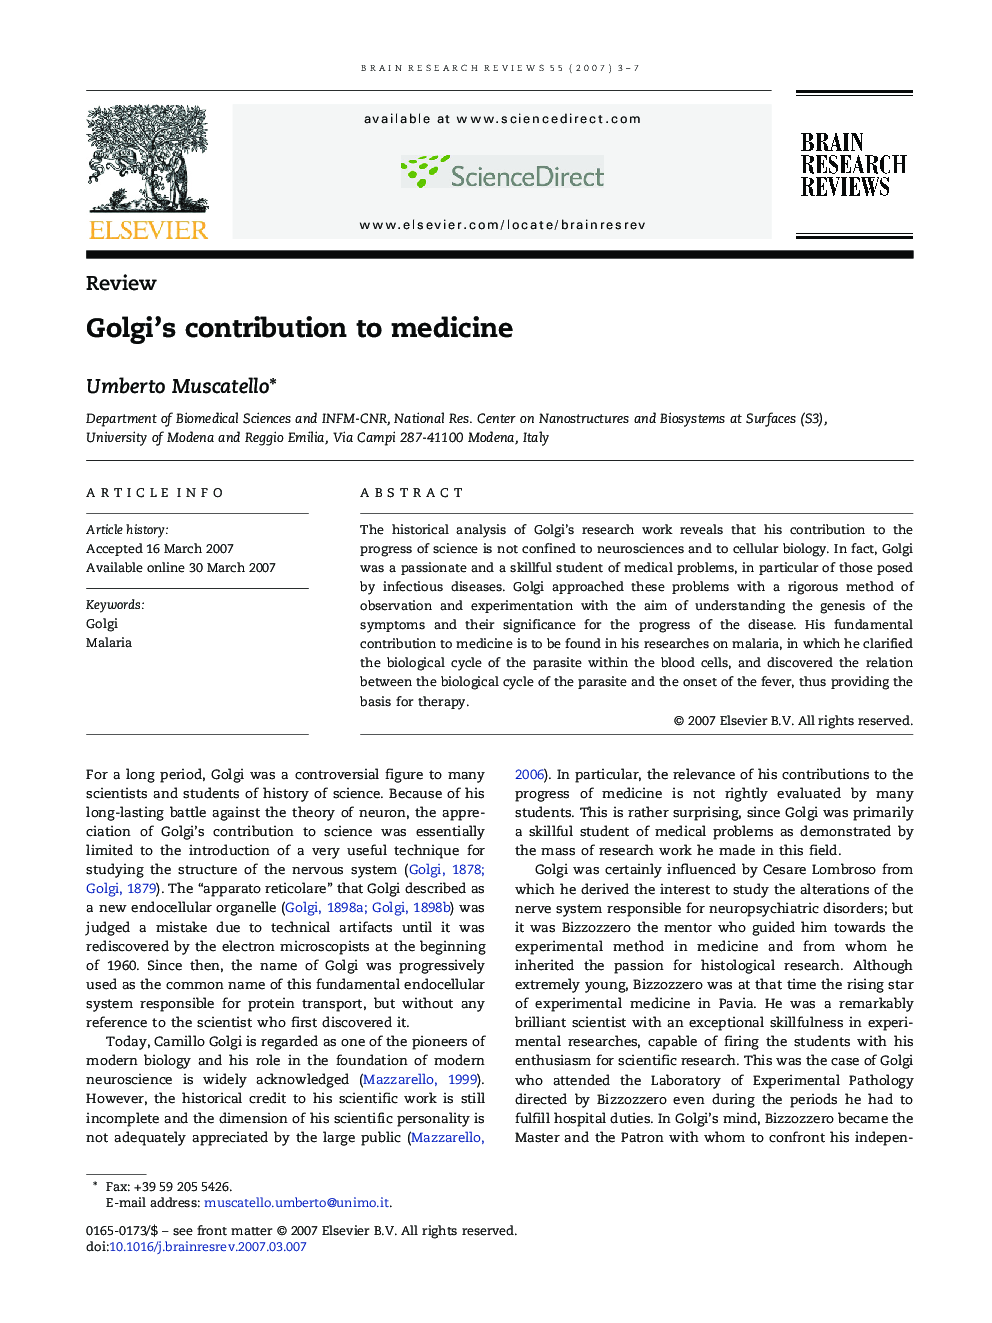 Golgi's contribution to medicine